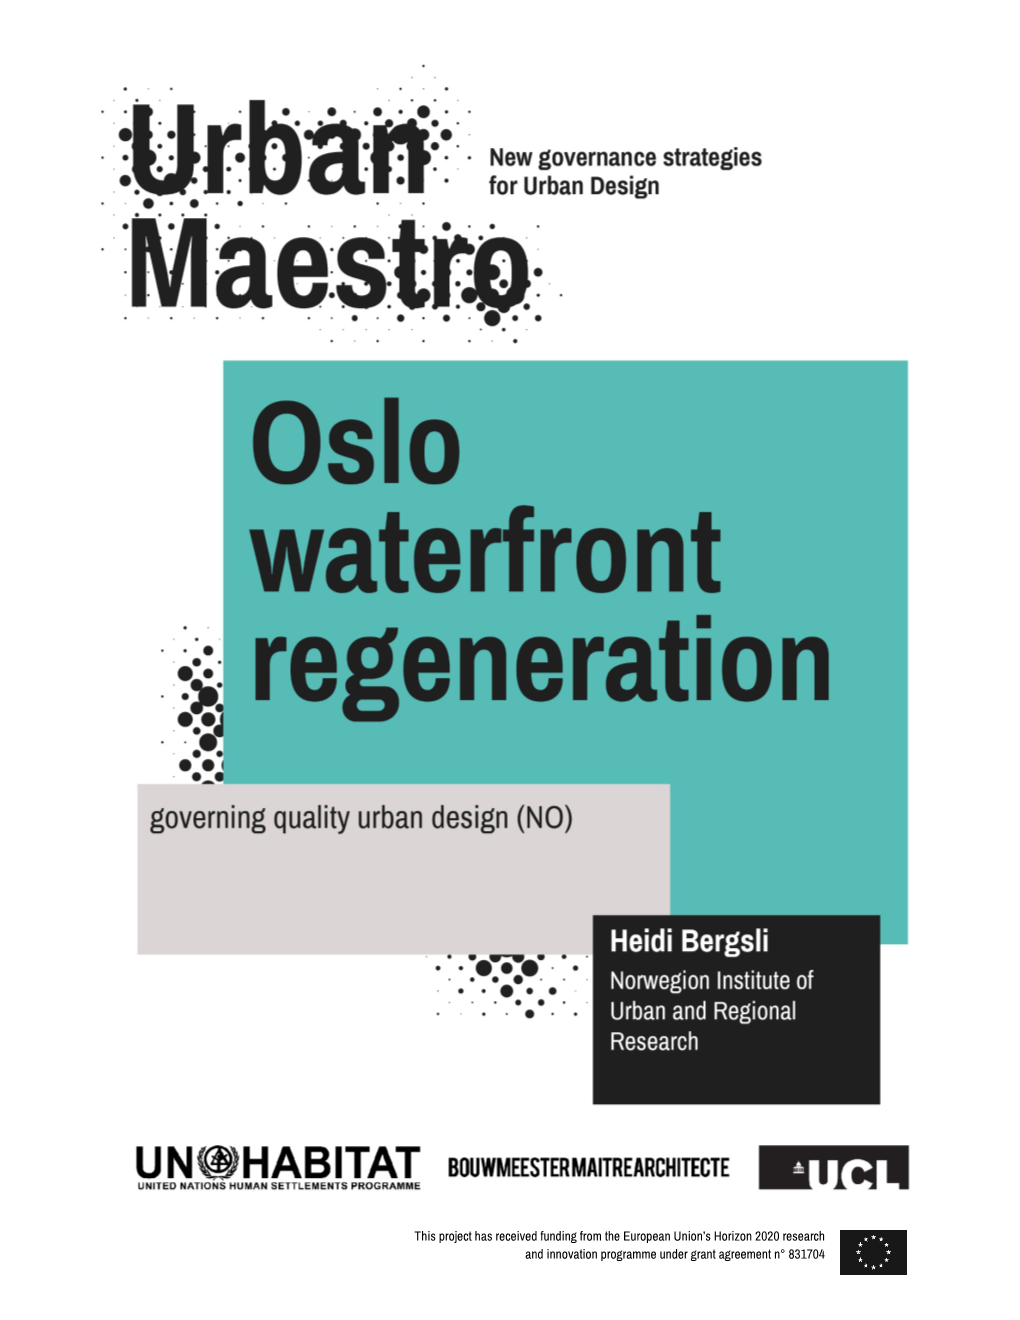 Oslo Waterfront Regeneration by Heidi Bergsli